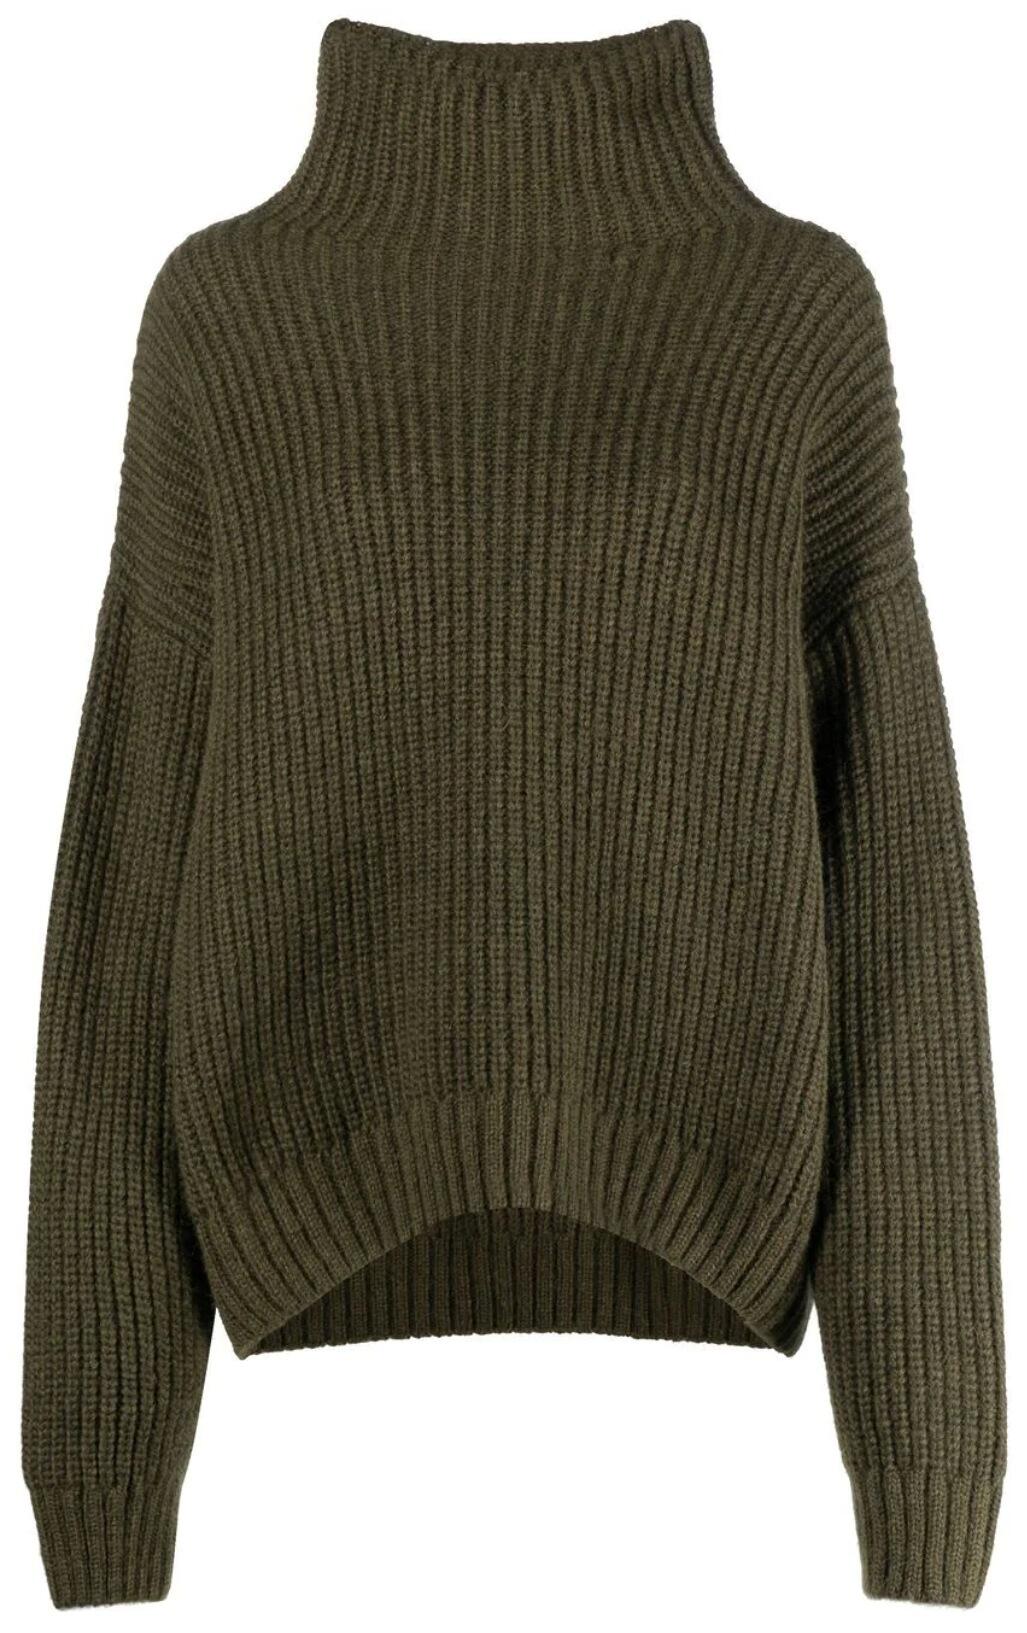 Sydney Sweater (Olive) | style